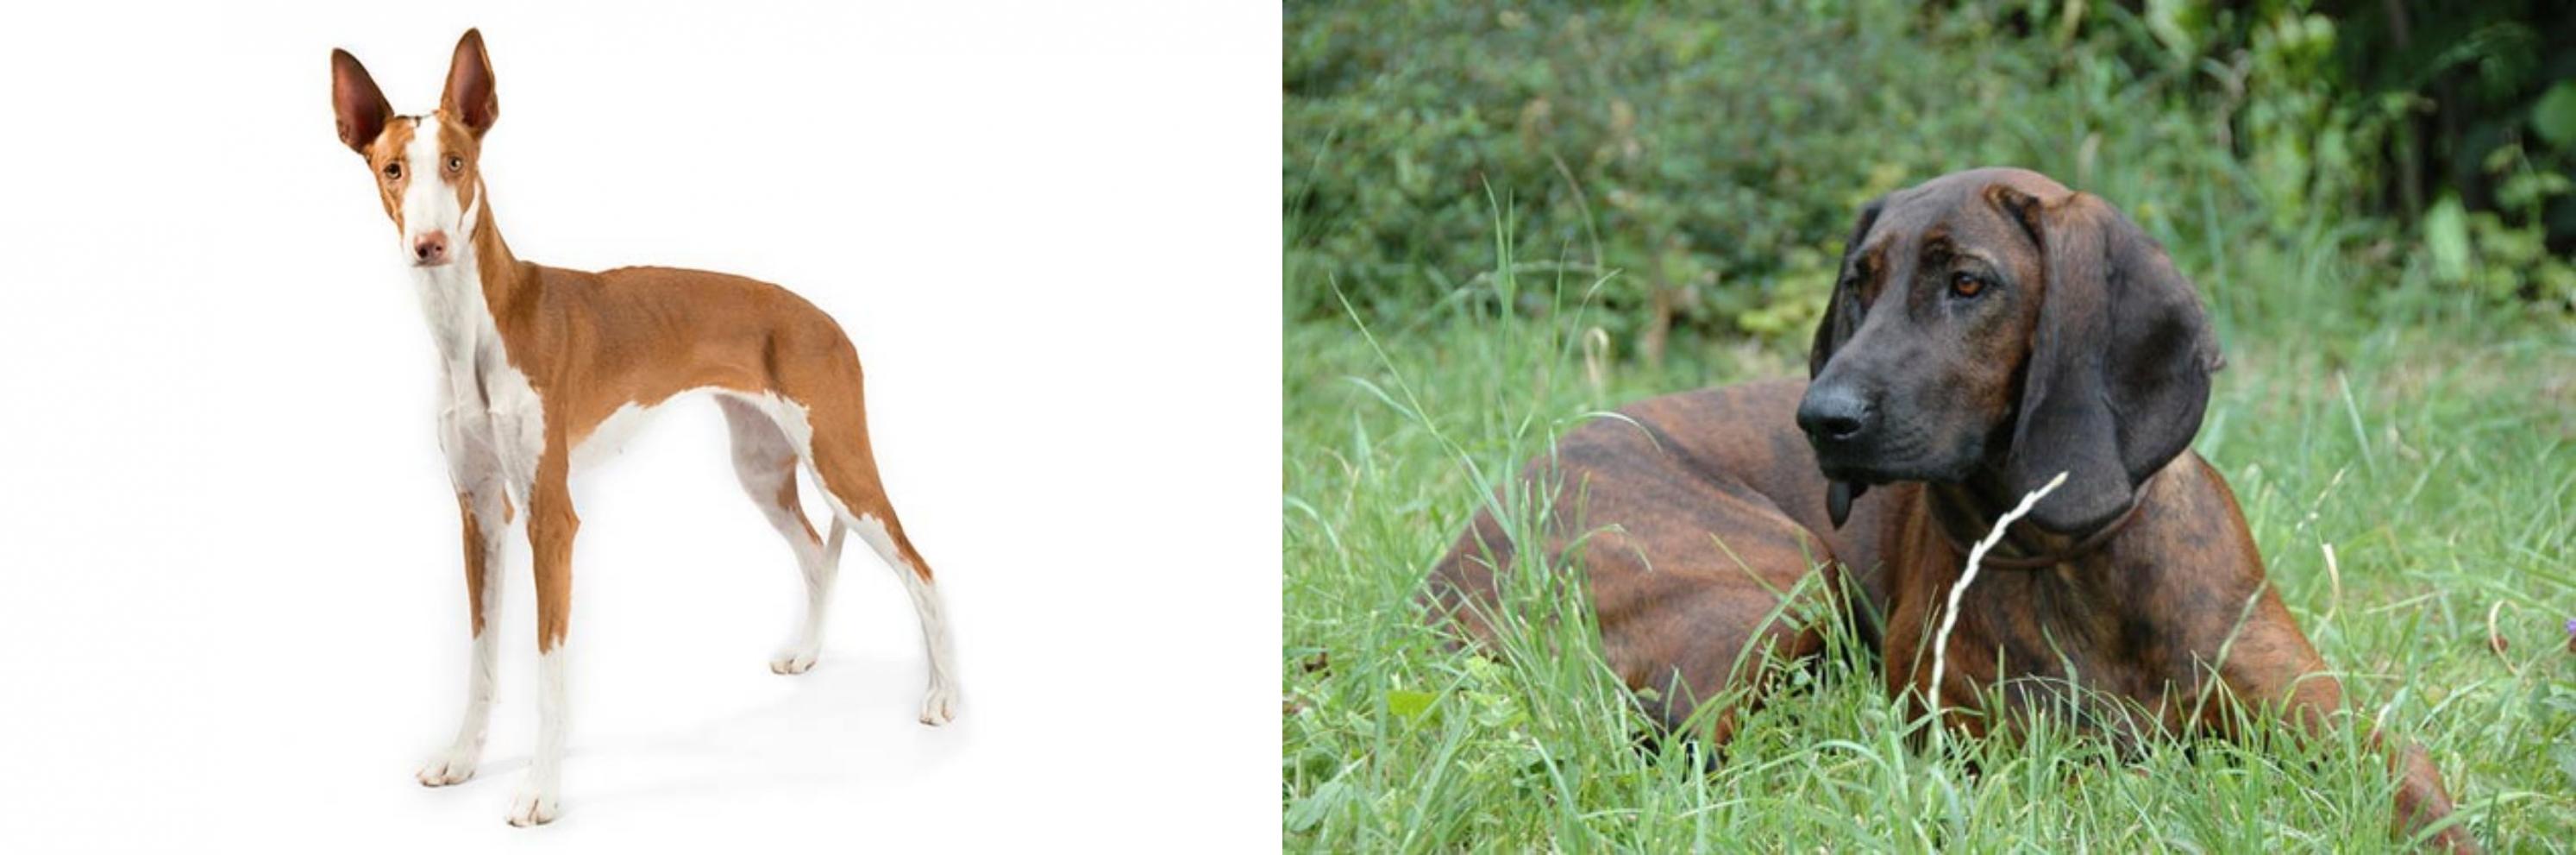 Ibizan Hound vs Hanover Hound - Breed Comparison | MyDogBreeds